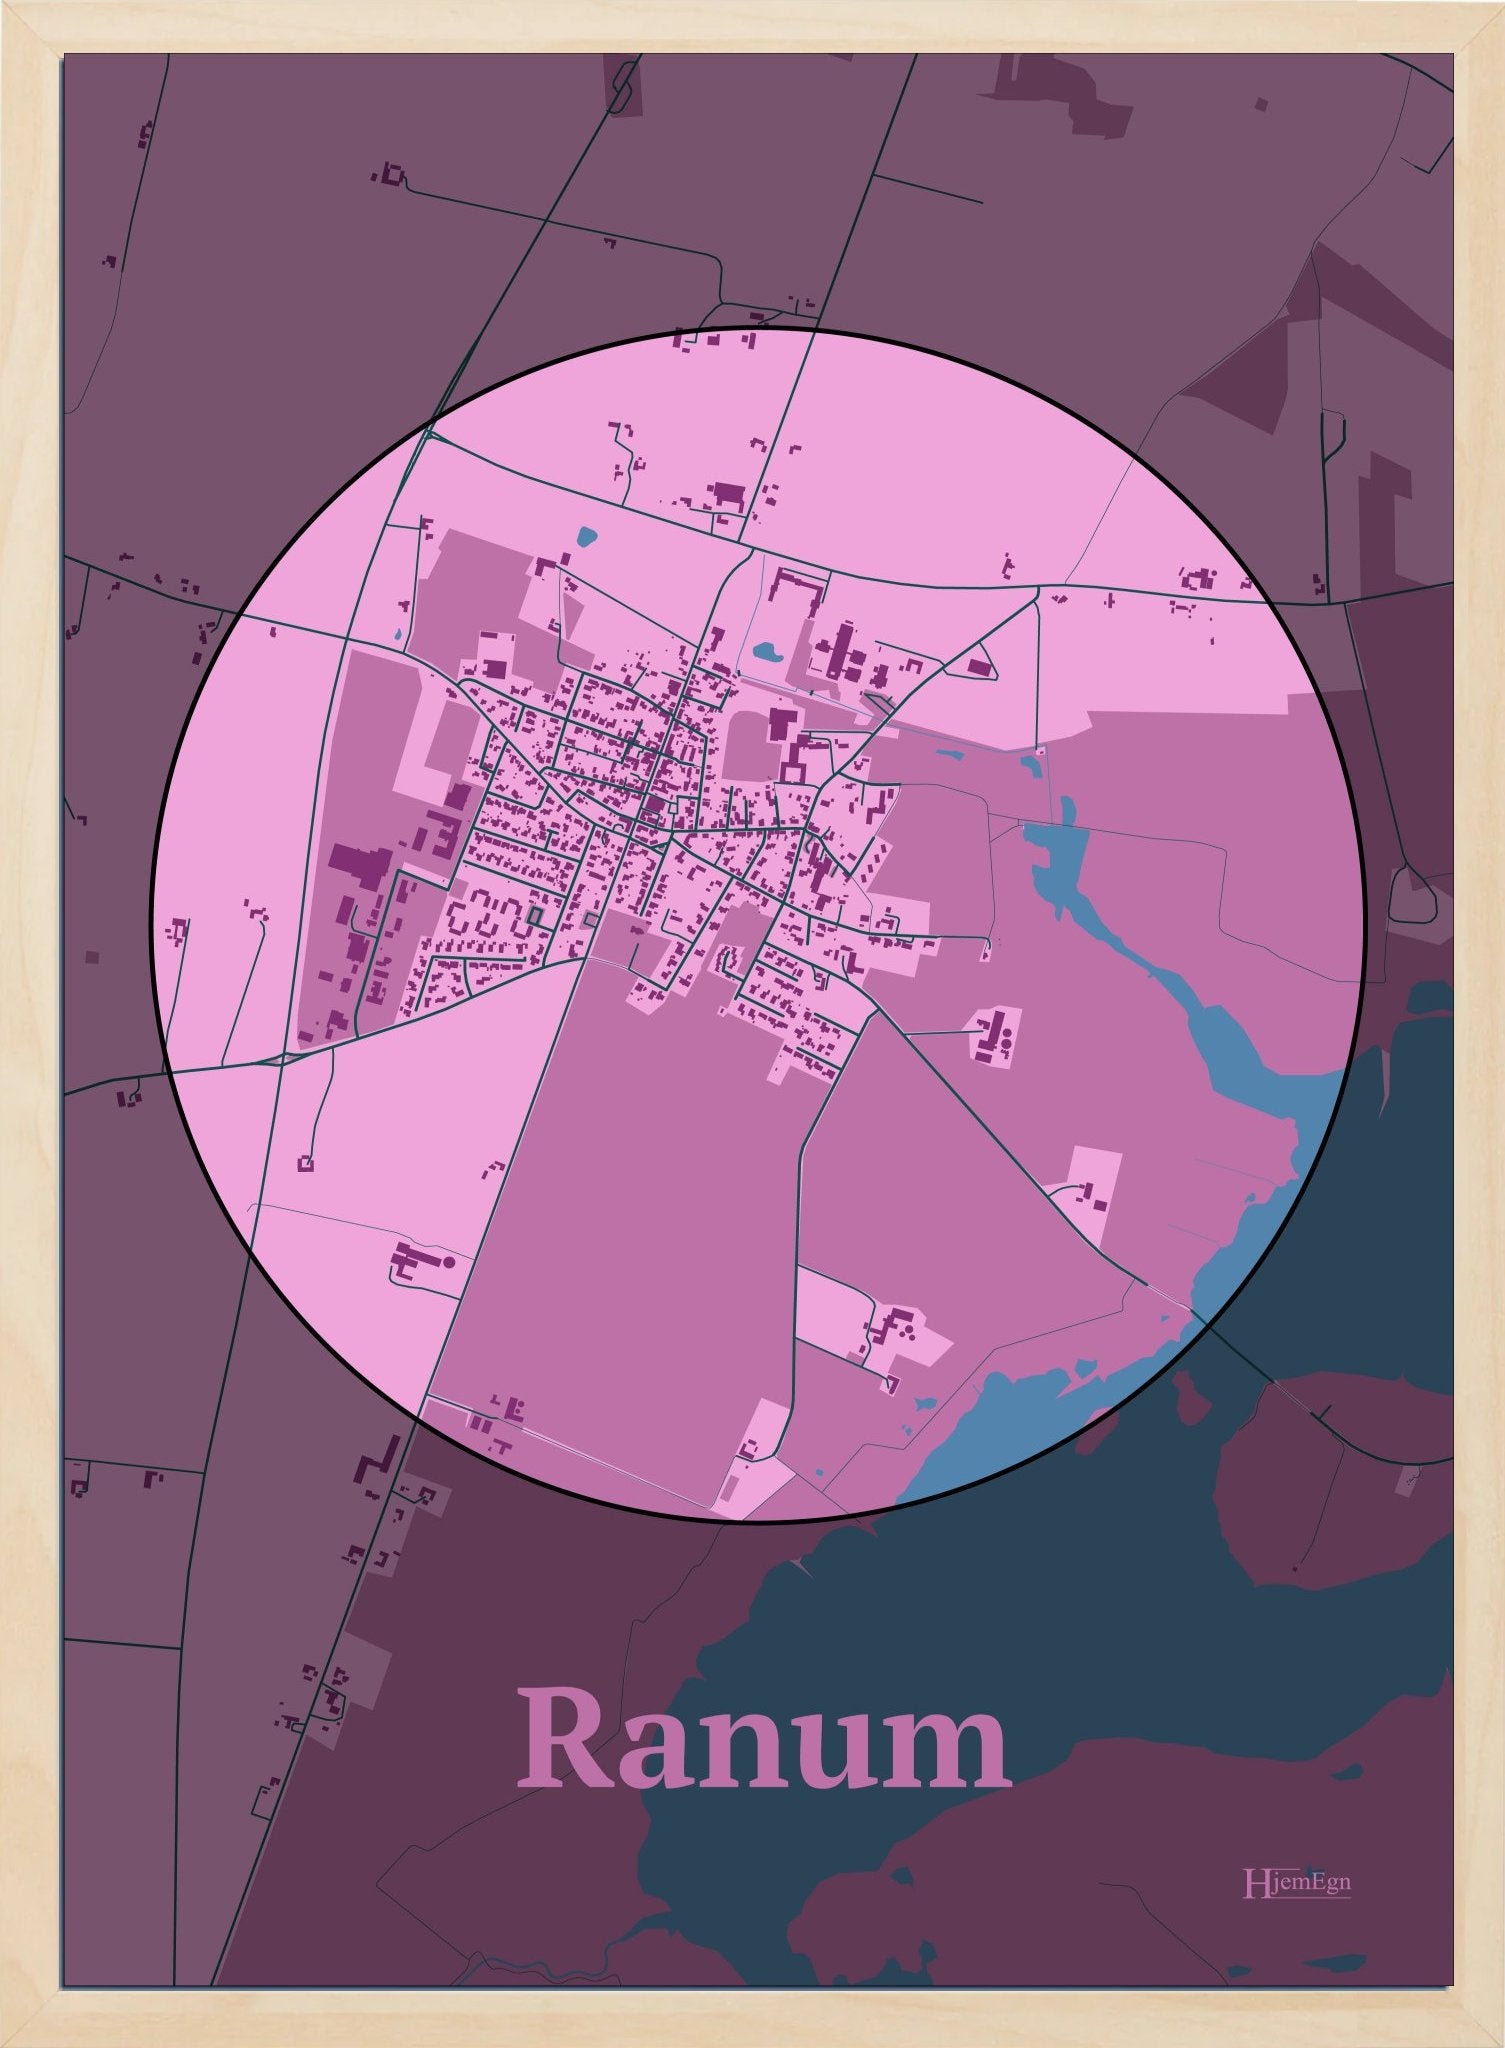 Ranum plakat i farve pastel rød og HjemEgn.dk design centrum. Design bykort for Ranum